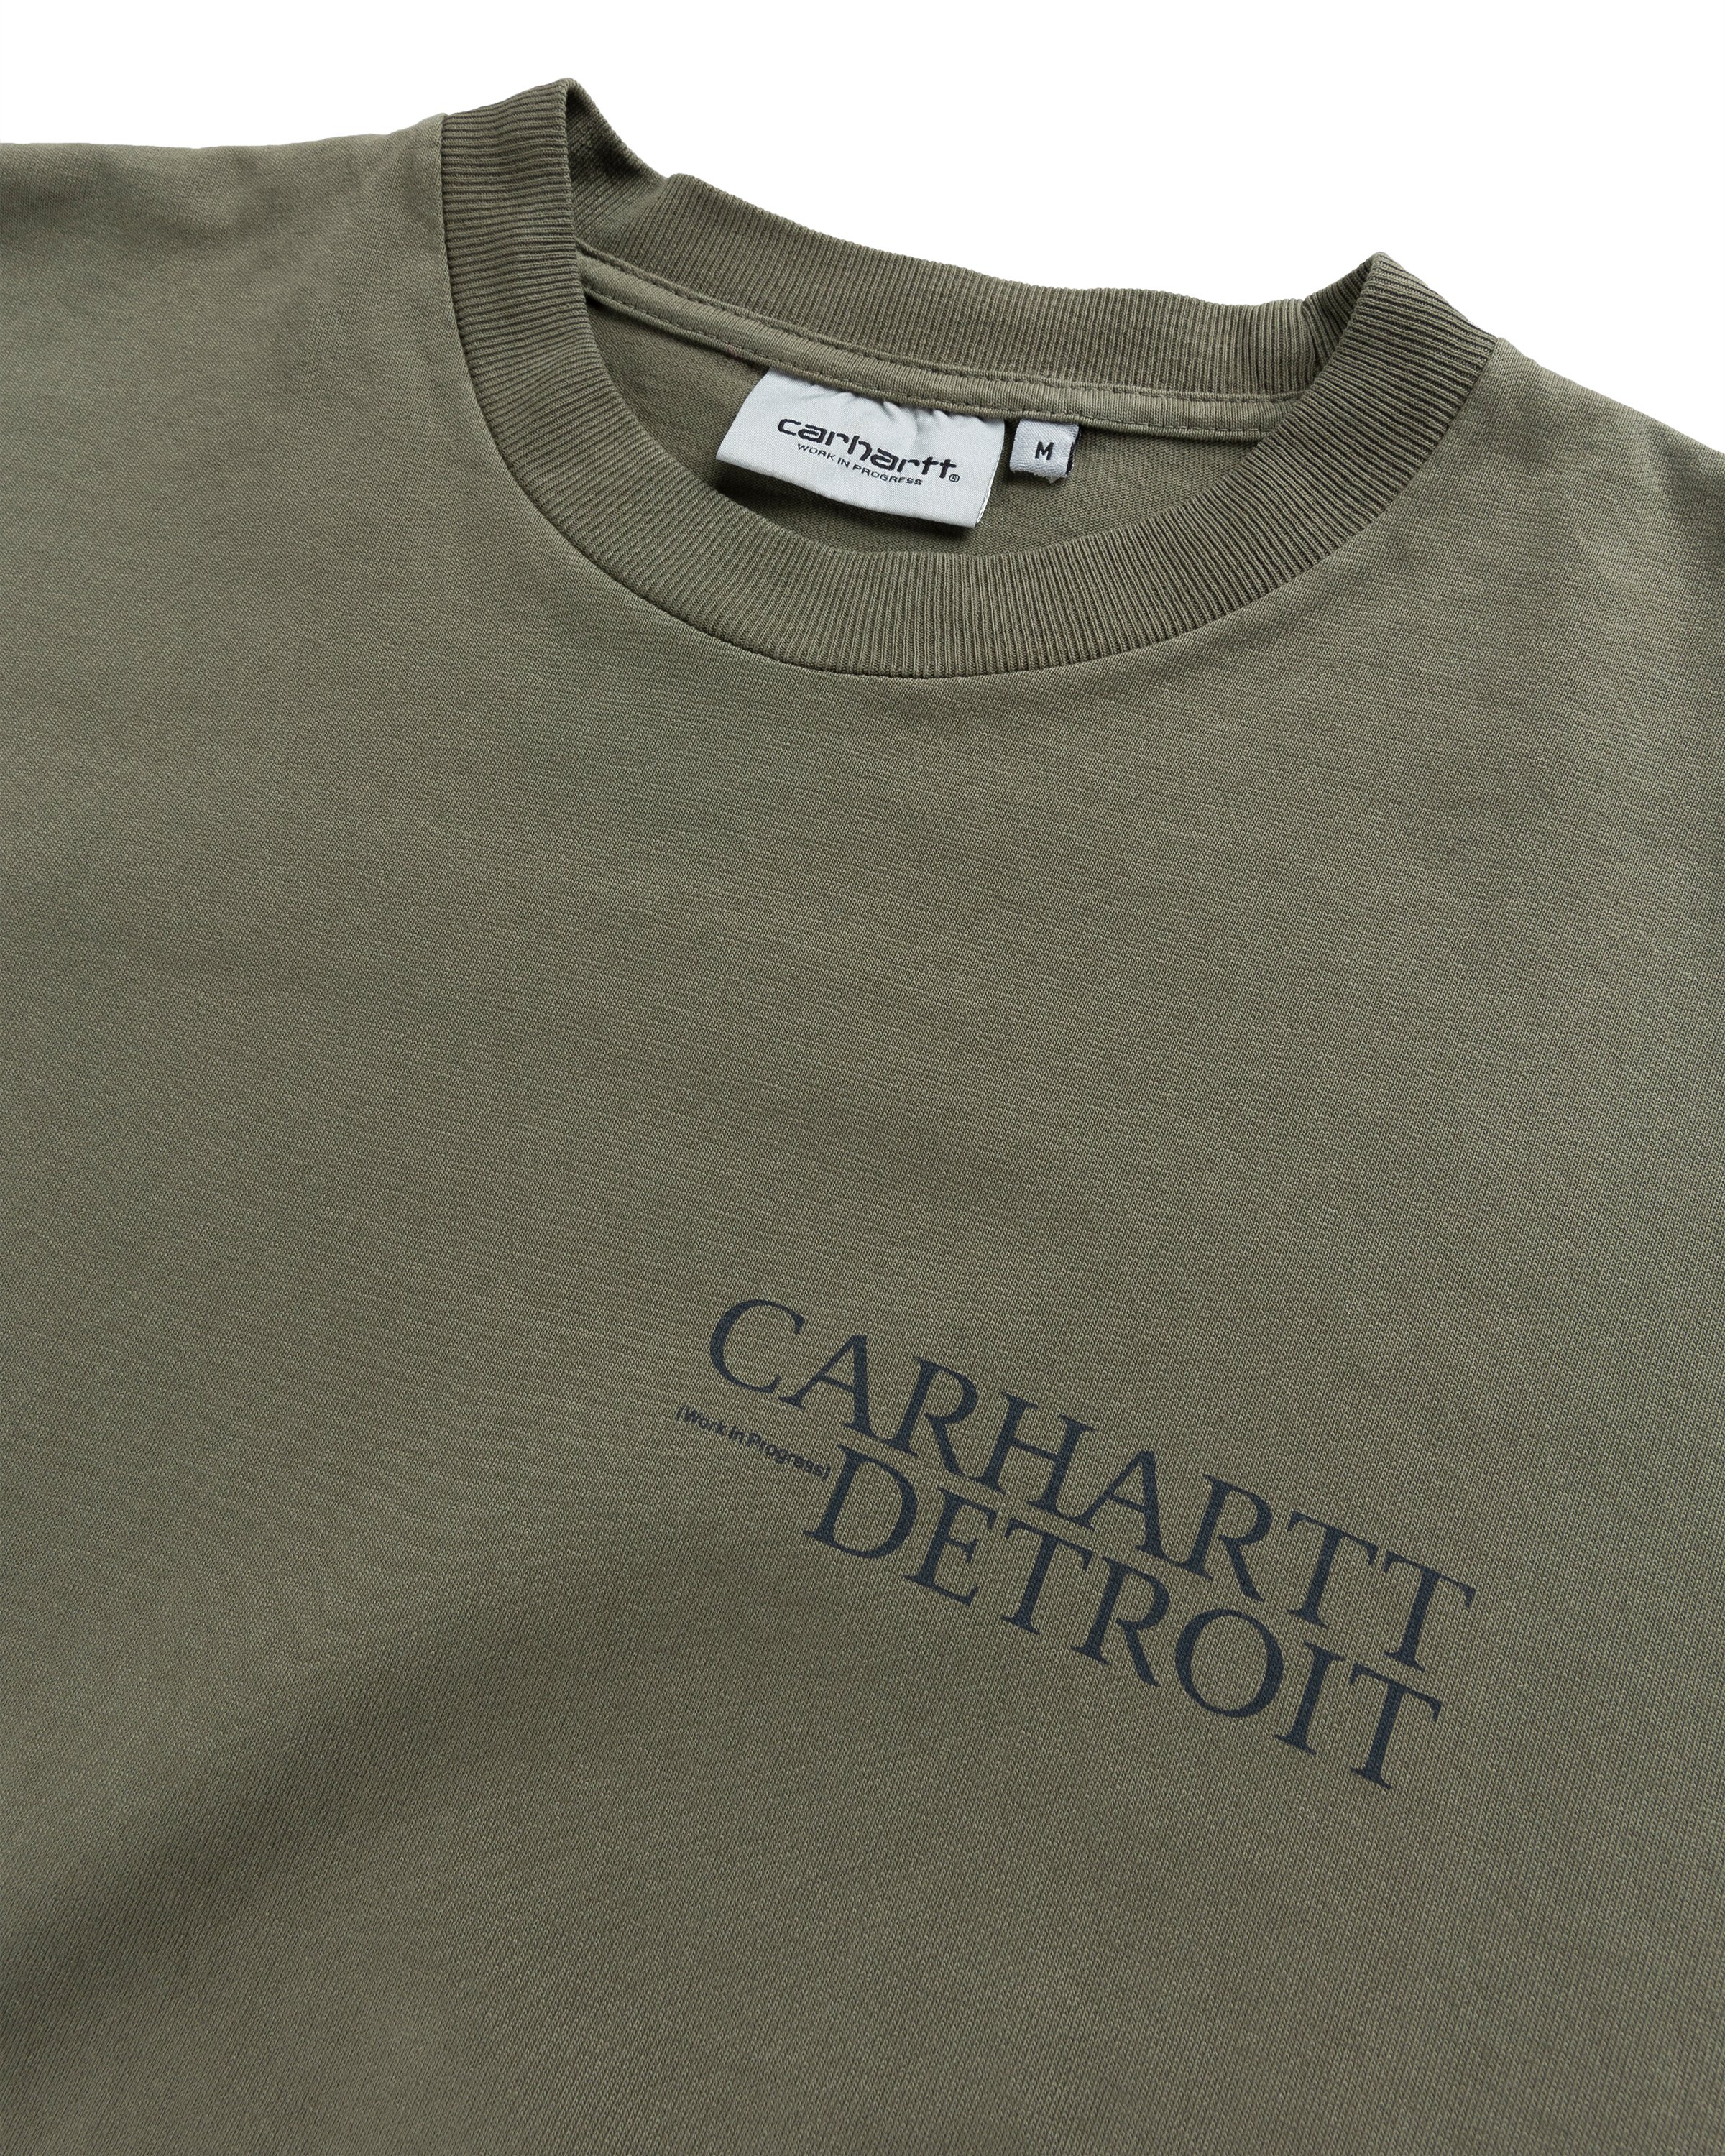 Carhartt WIP - Undisputed T-Shirt Seaweed - Clothing - Green - Image 3